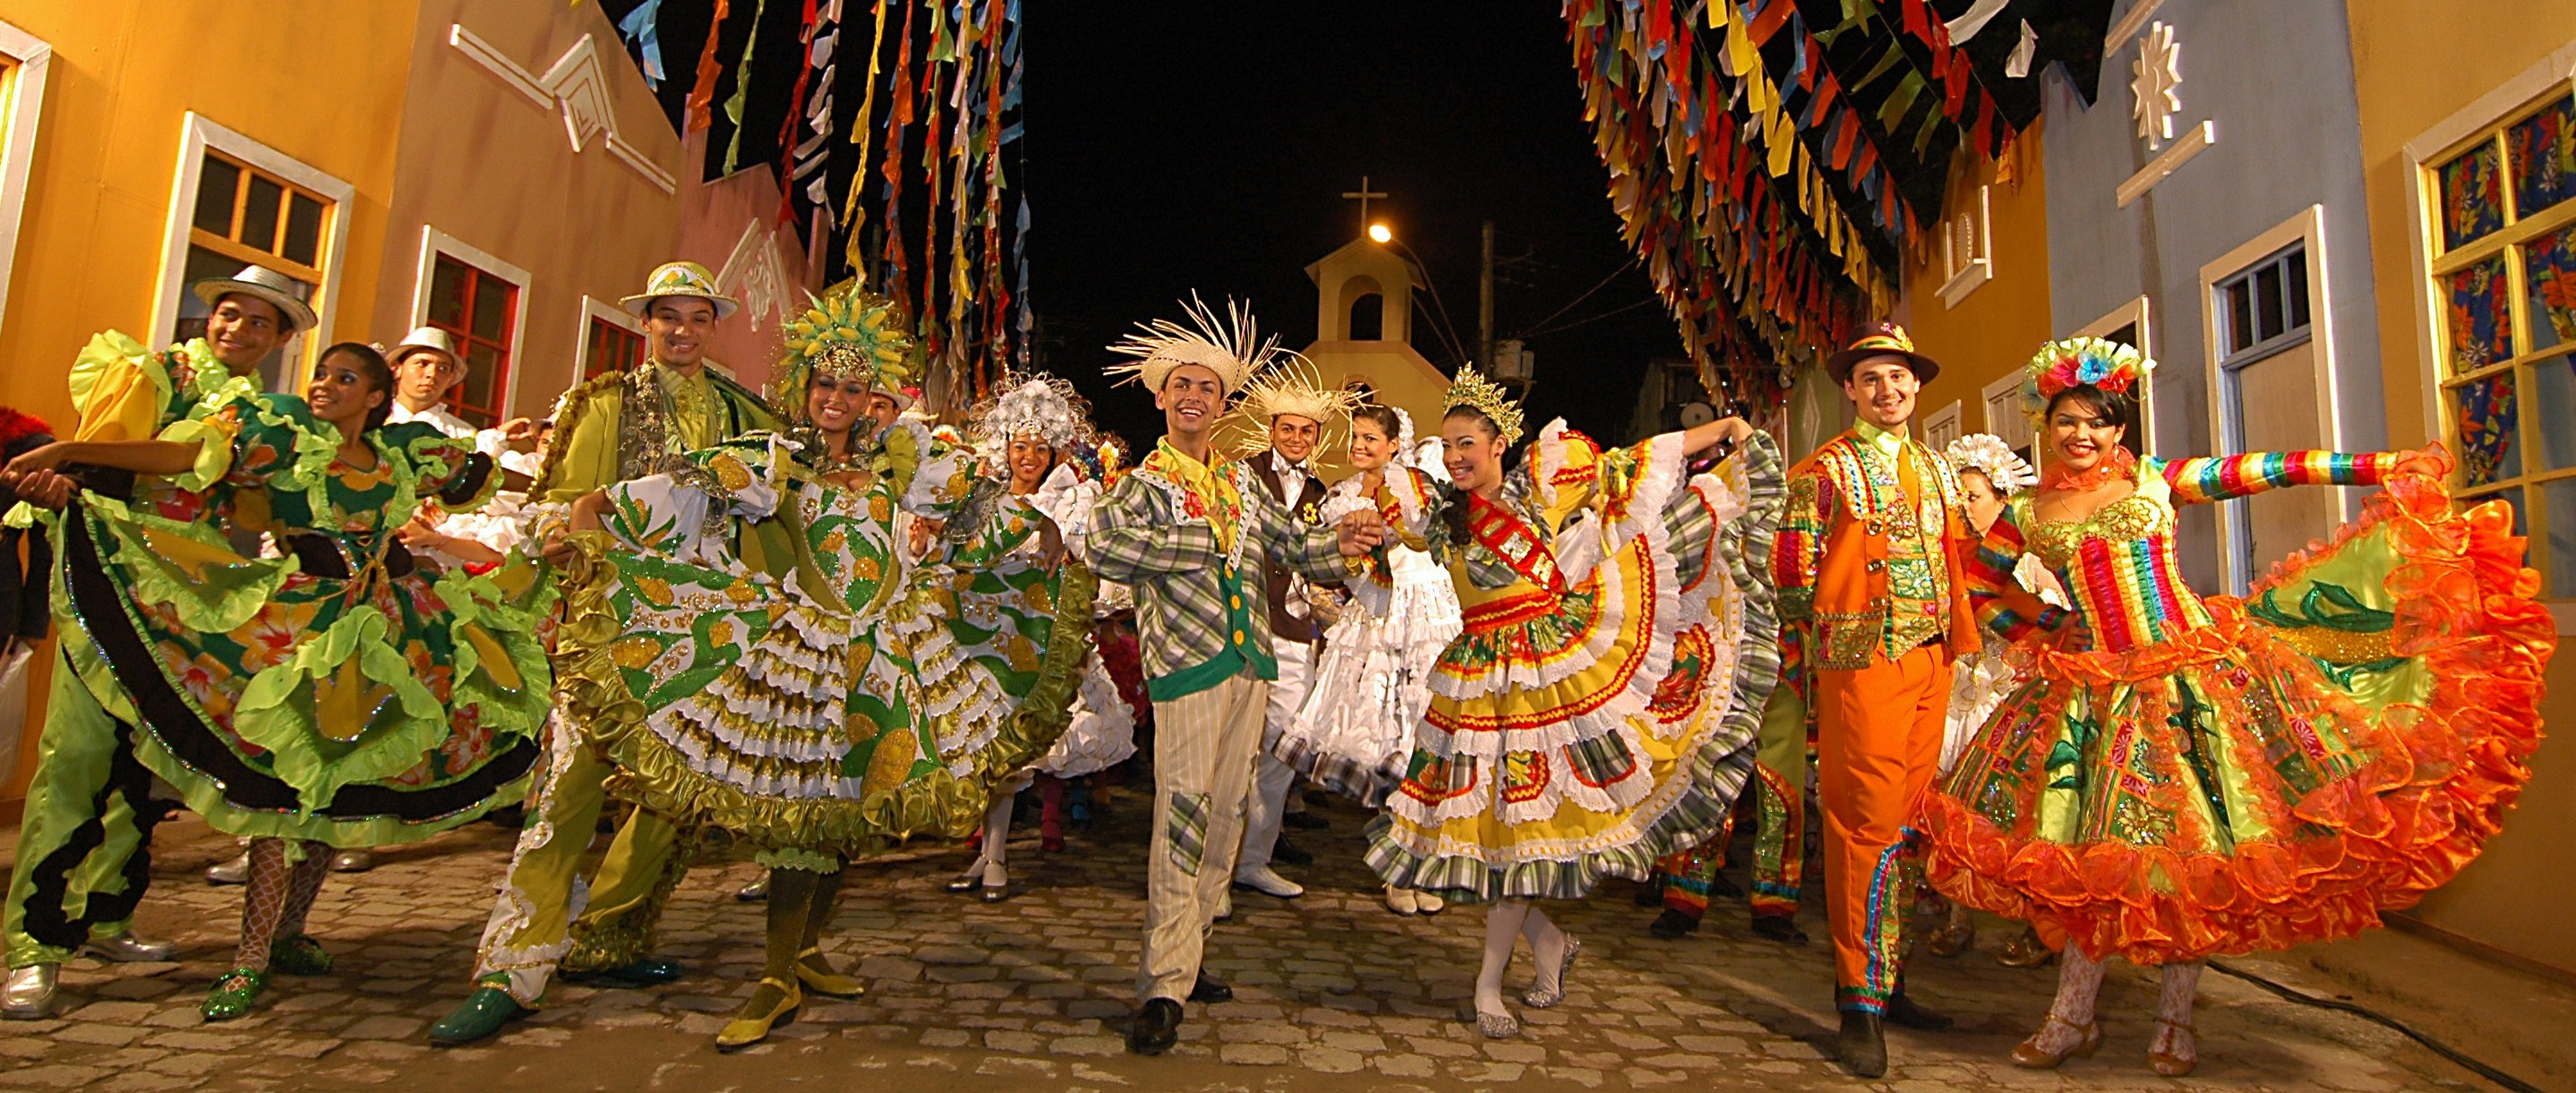 https://cursodebaba.com/images/festa-junina-origem-nordeste